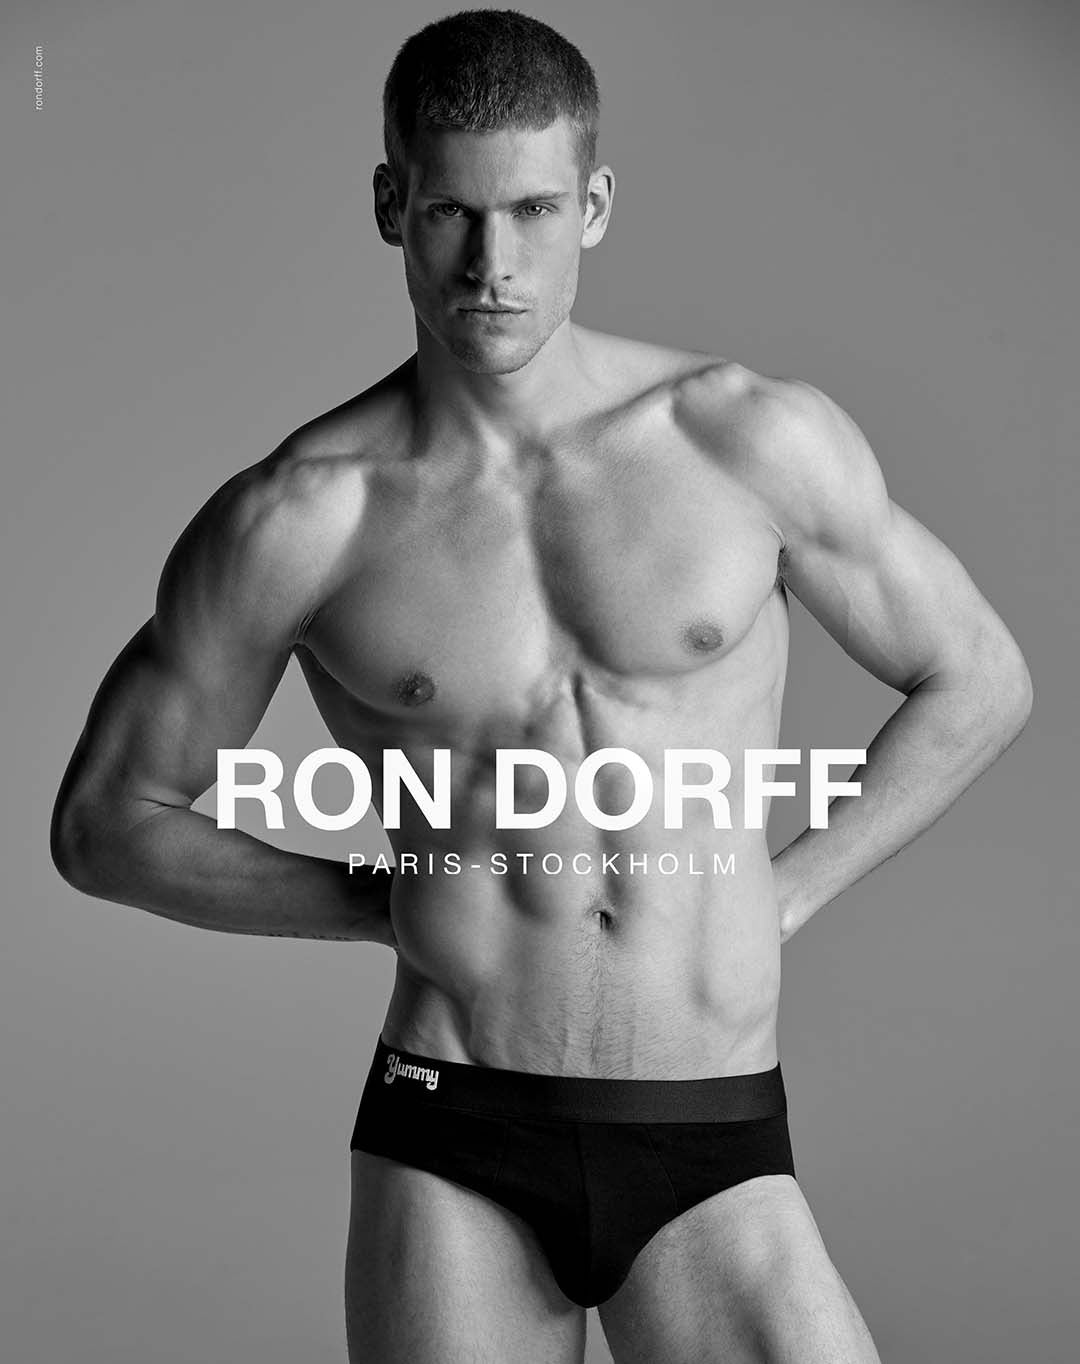 Ron Dorff: French-Swedish sportswear